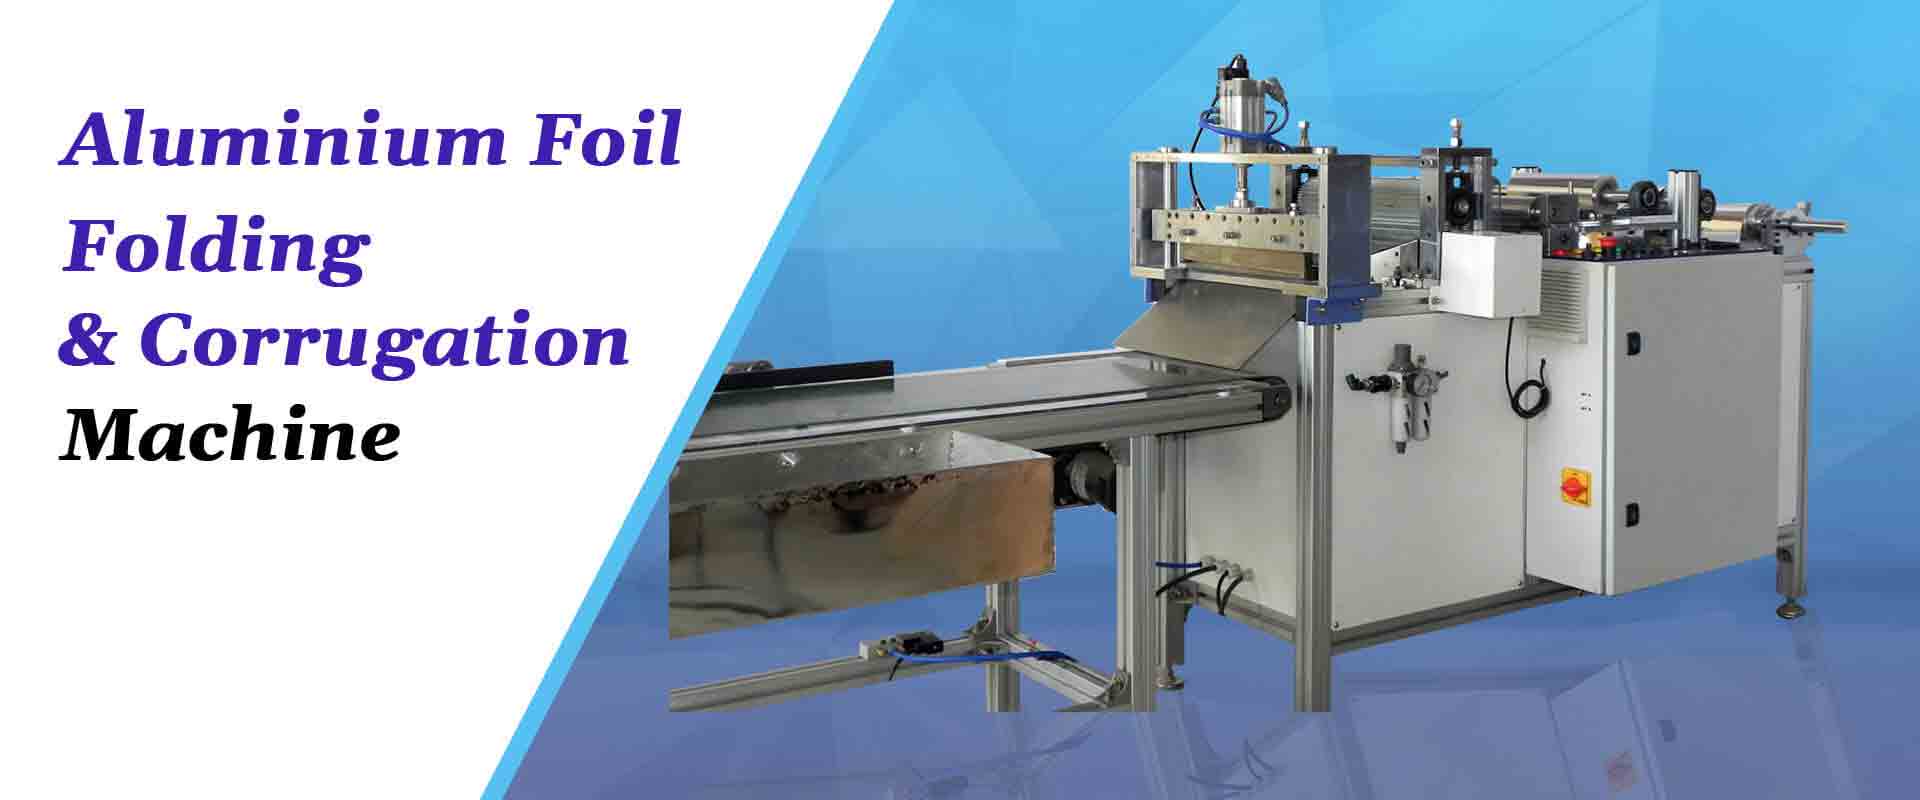 Aluminium Foil Folding & Corrugation Machine In Solan